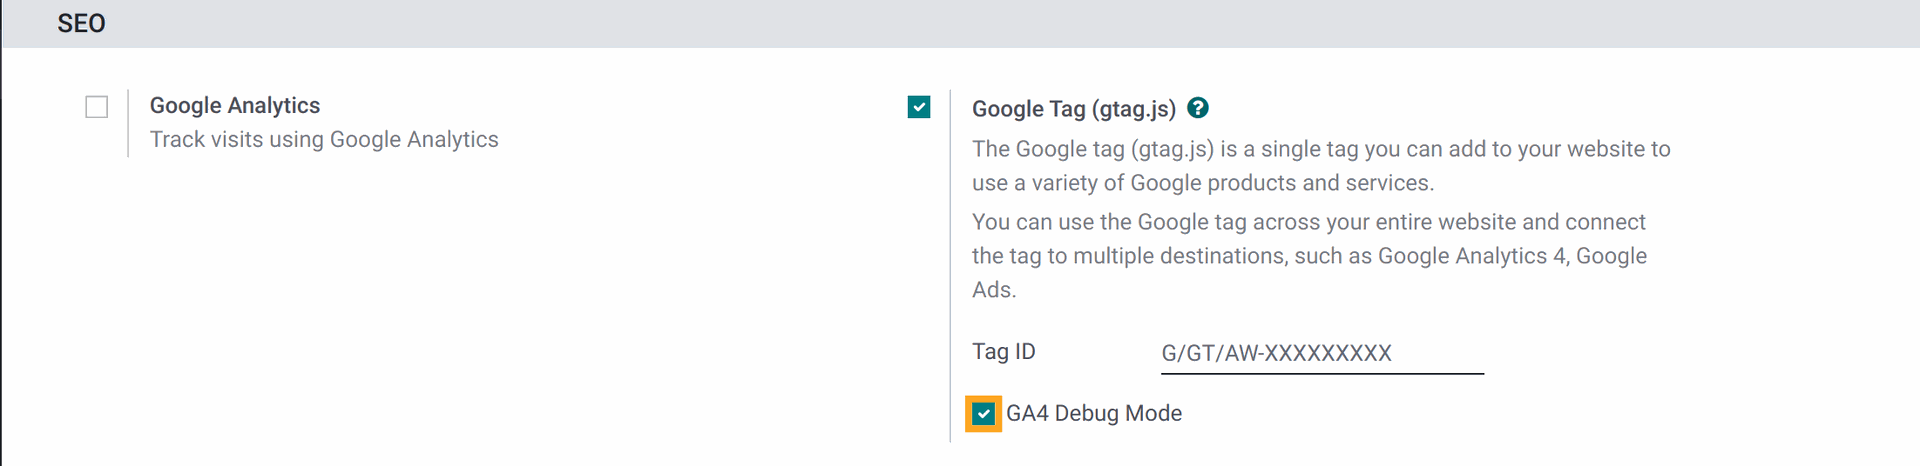 Odoo GA4 Google Analytics 4 Debug Mode setting in 17.0